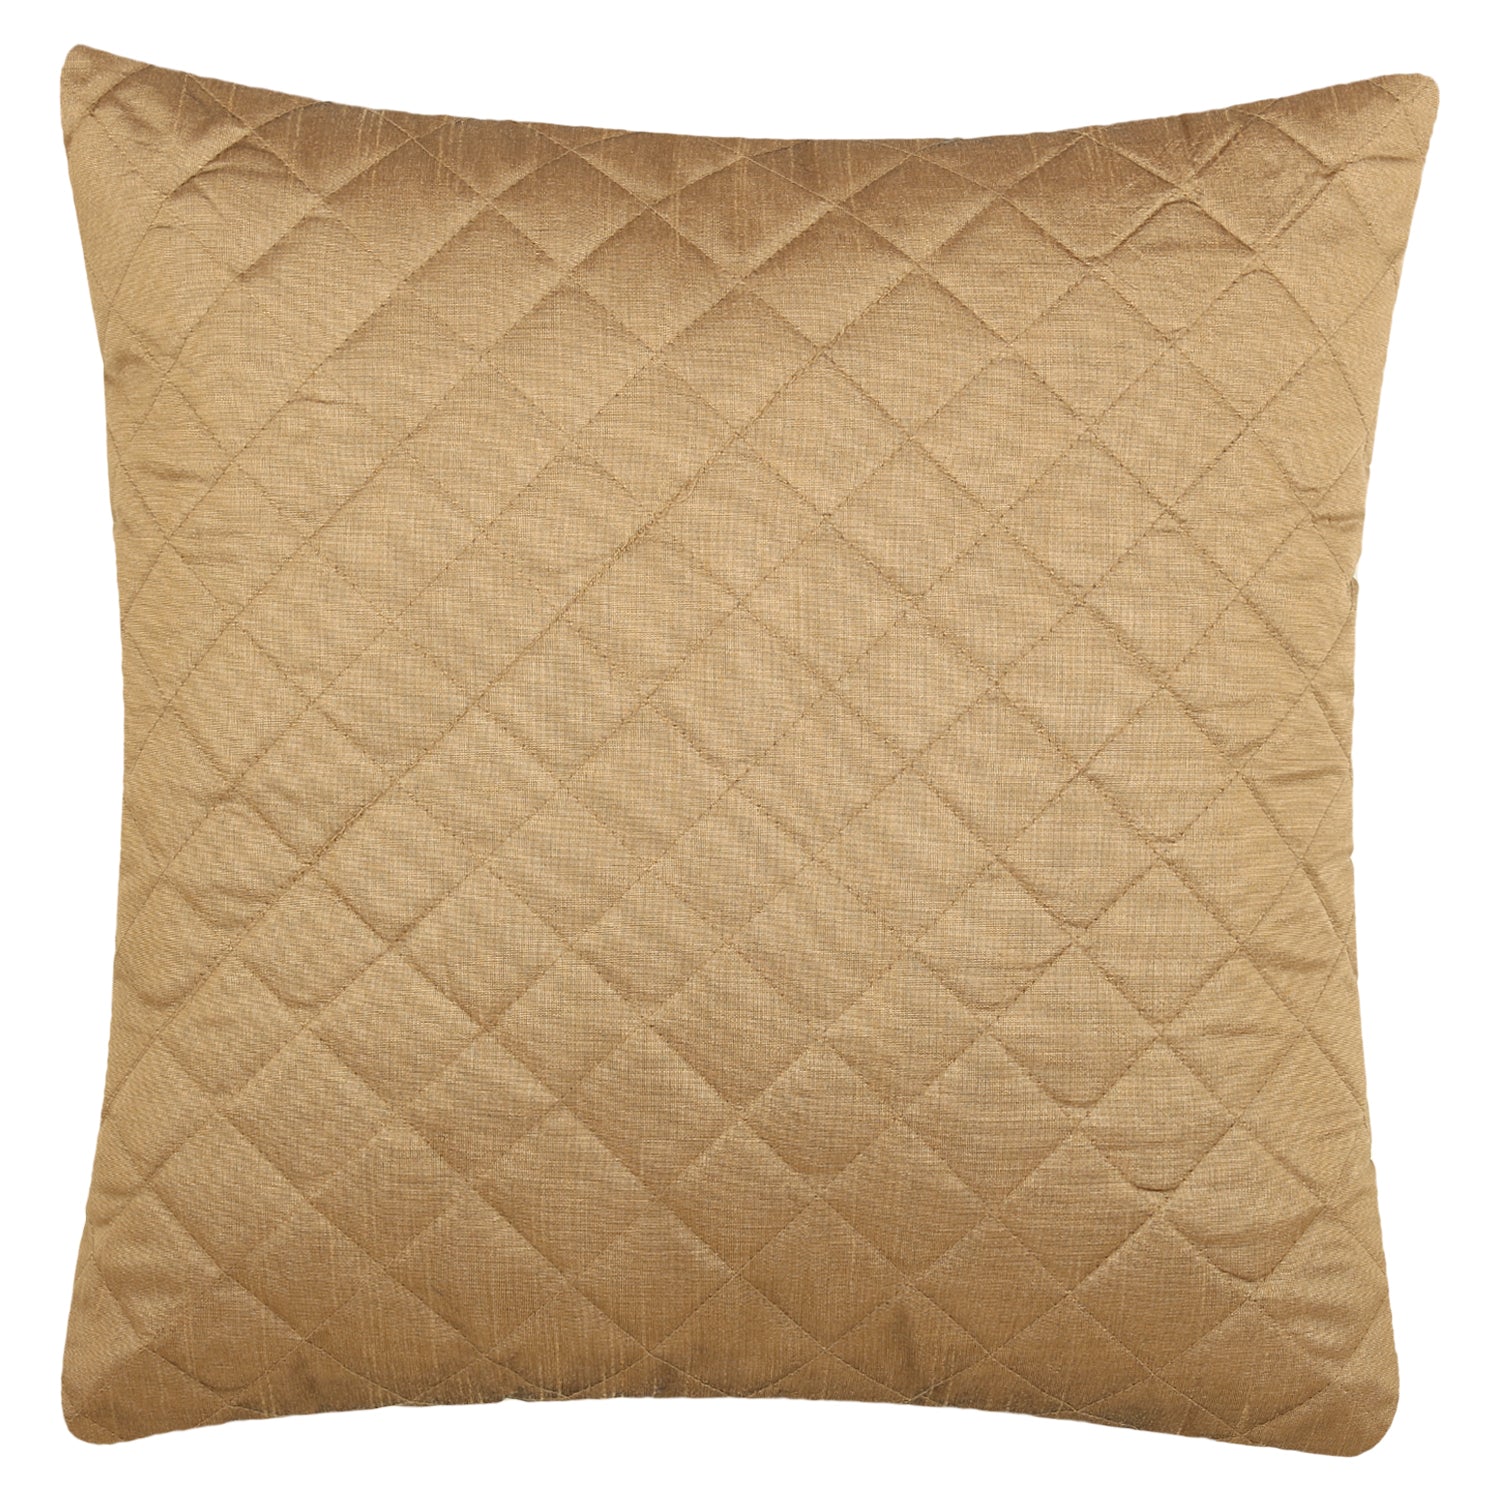 Desi Kapda Plain Gold Cushions Cover